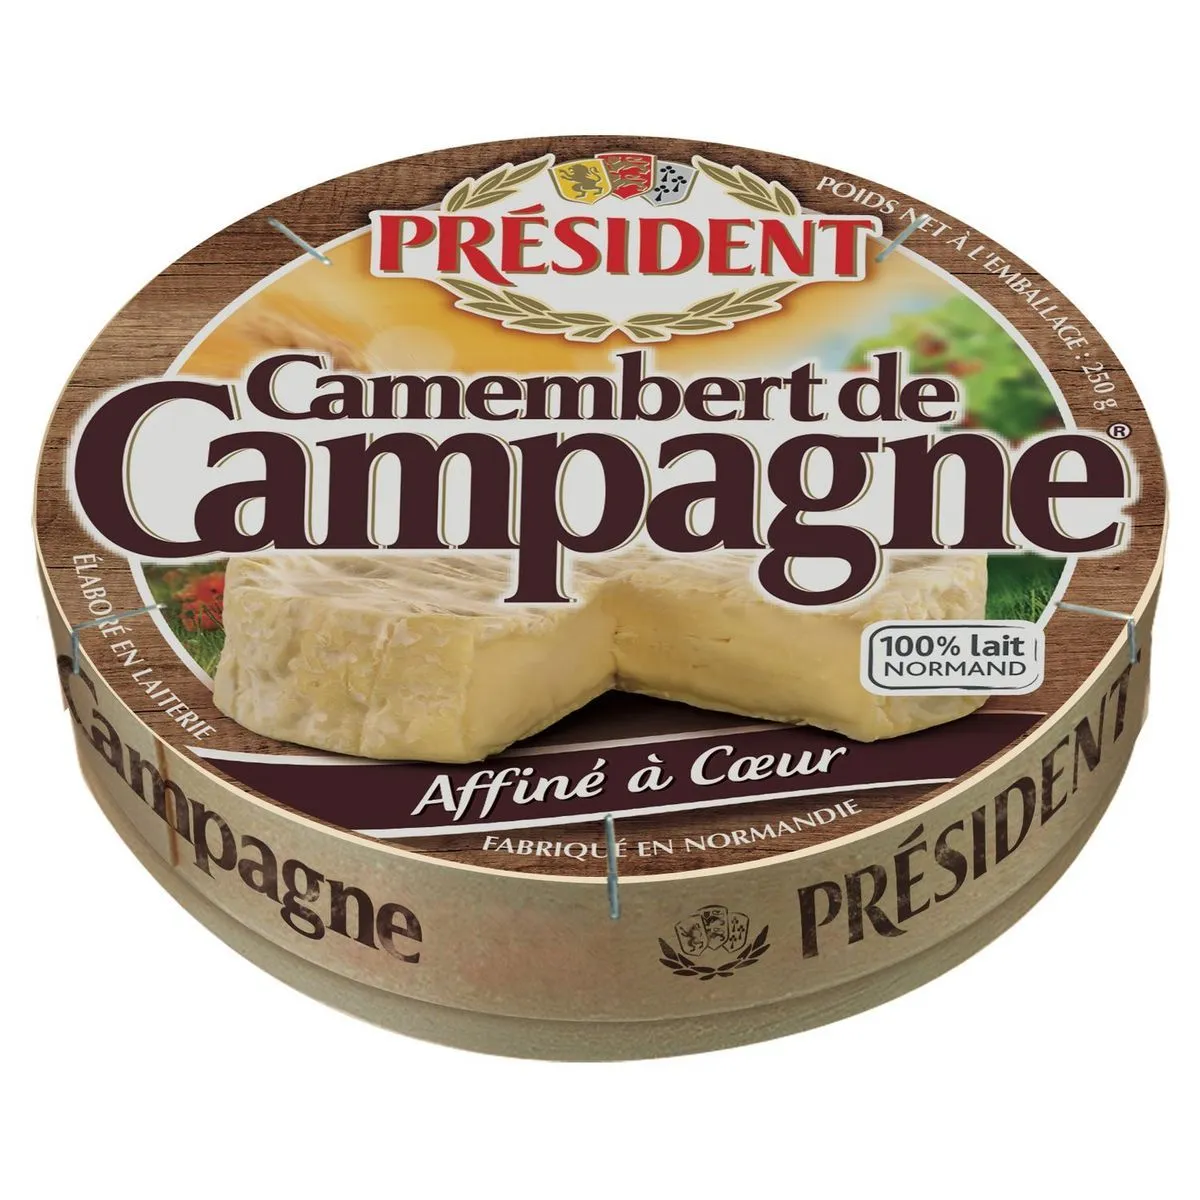 president camembert de campagne